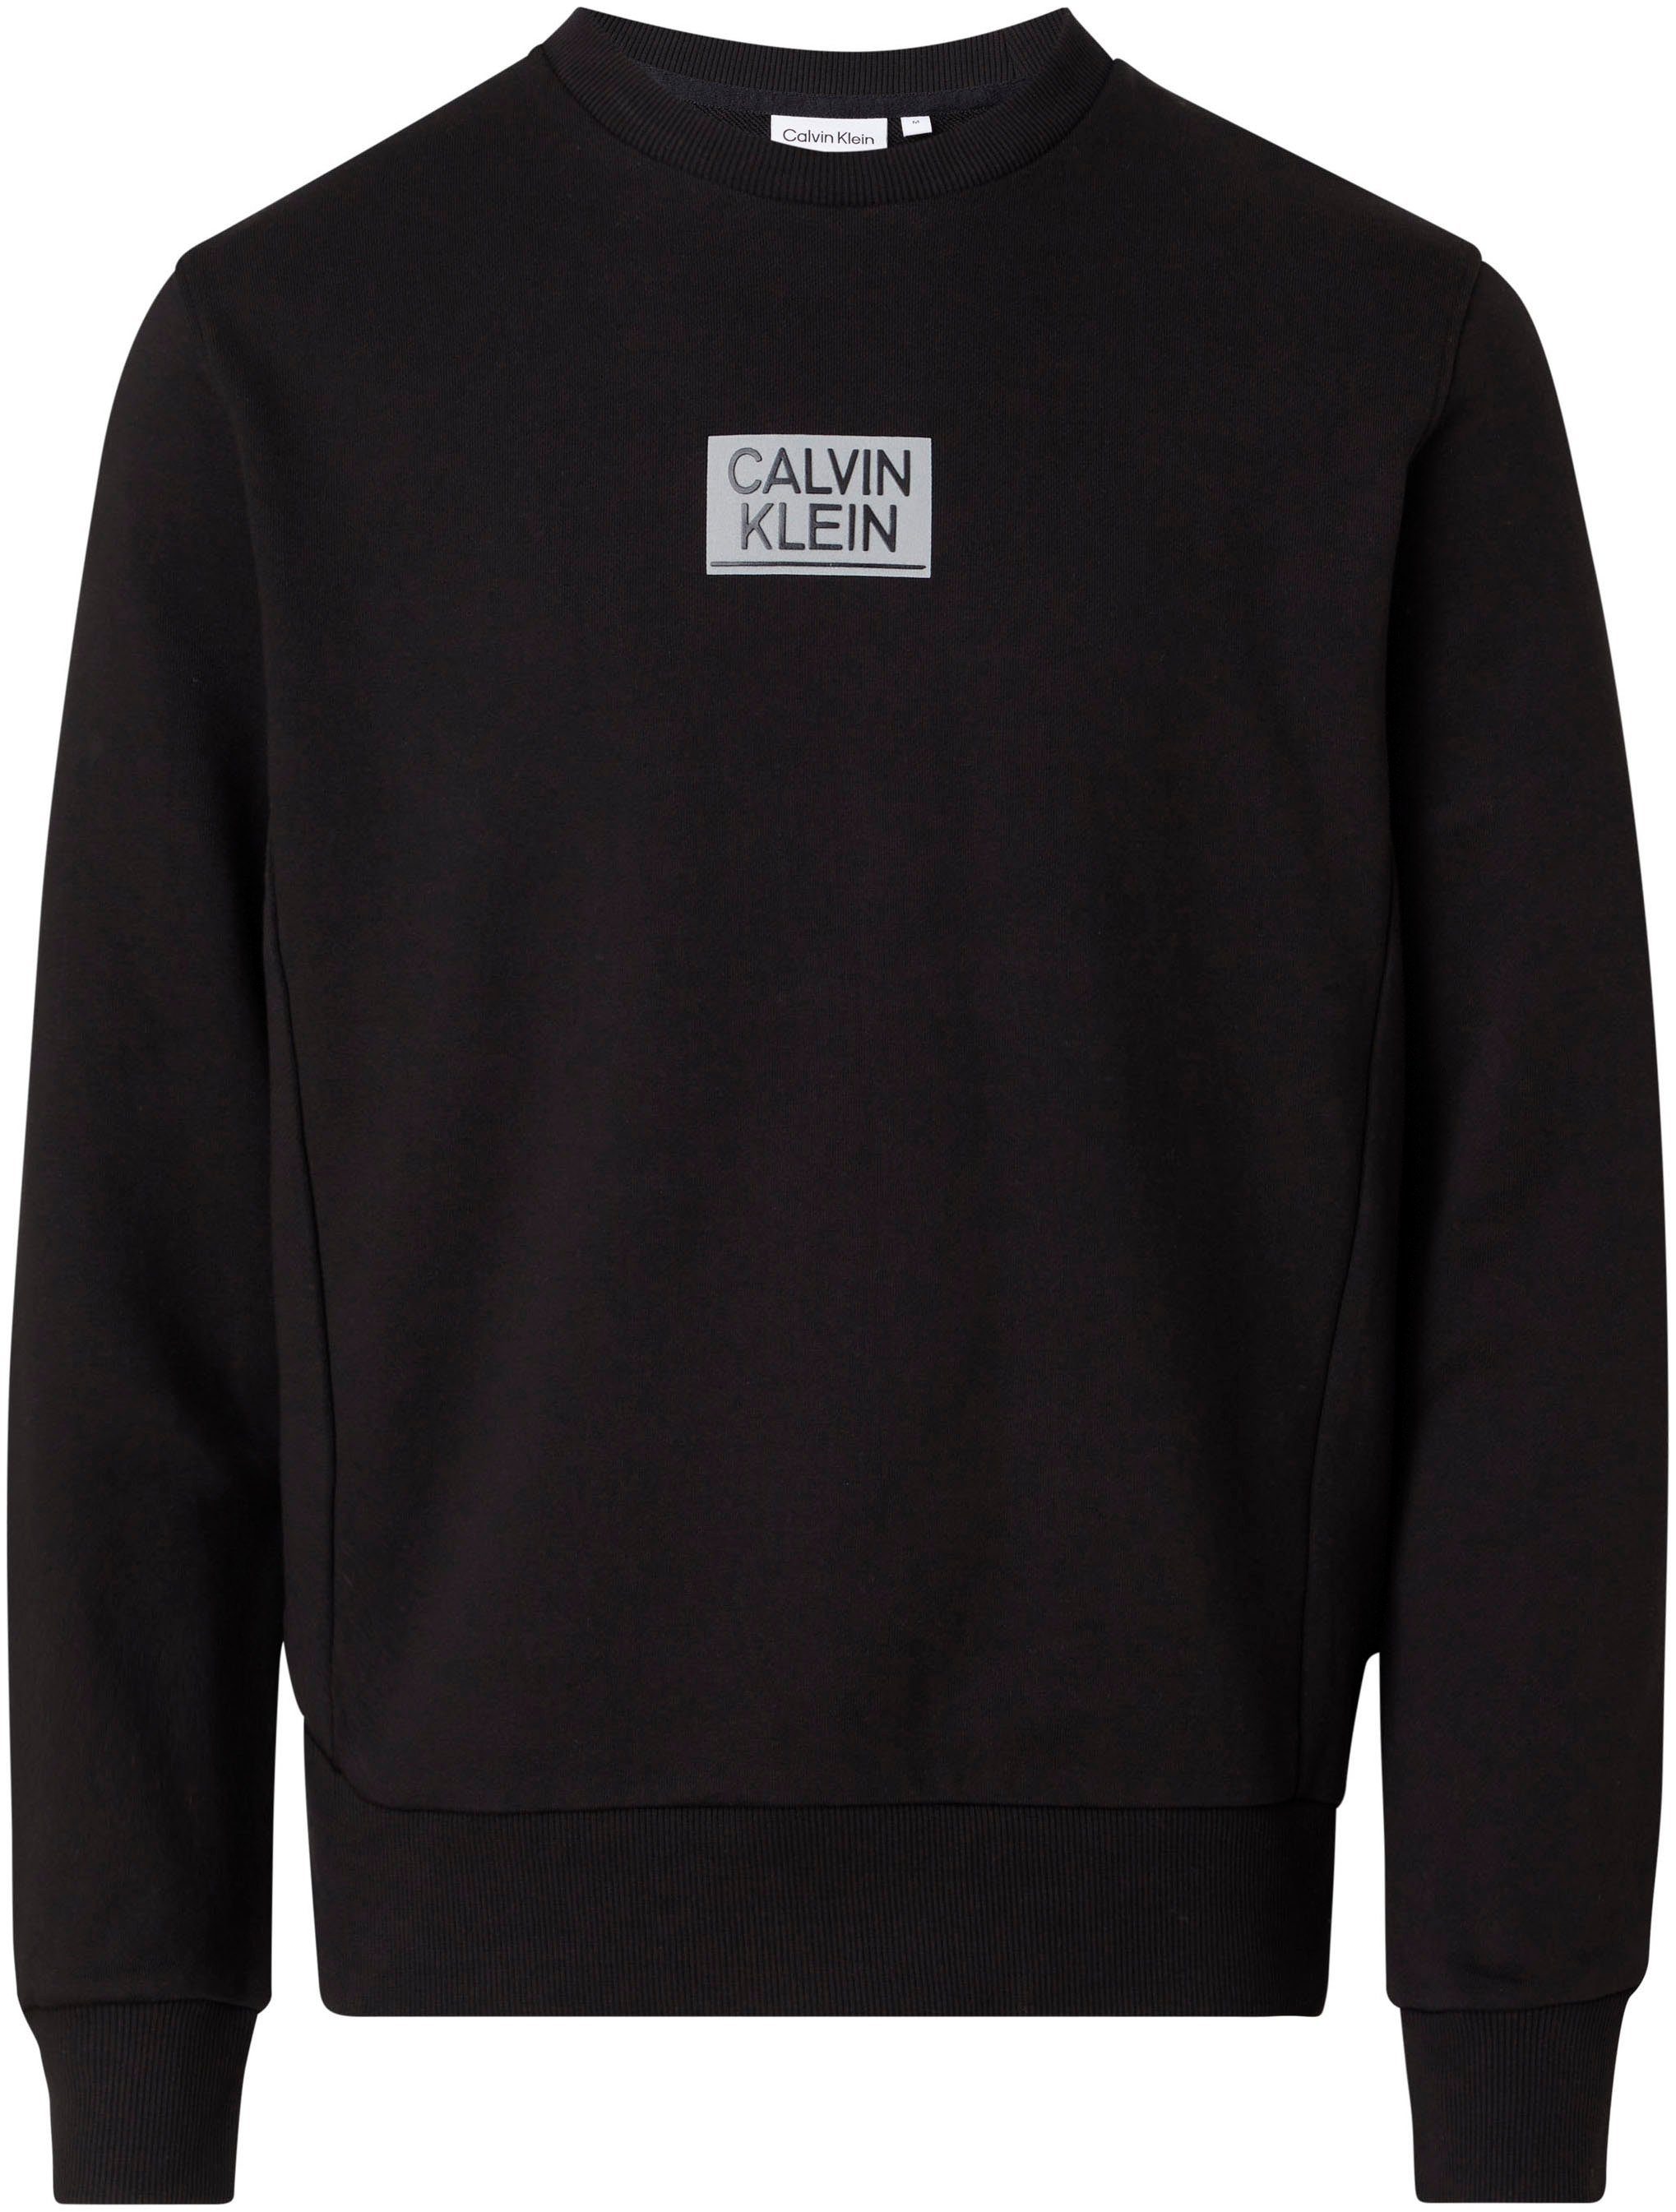 Calvin Klein Sweatshirt Big&Tall Black LOGO BT-GLOSS SWEATSHIRT STENCIL Ck